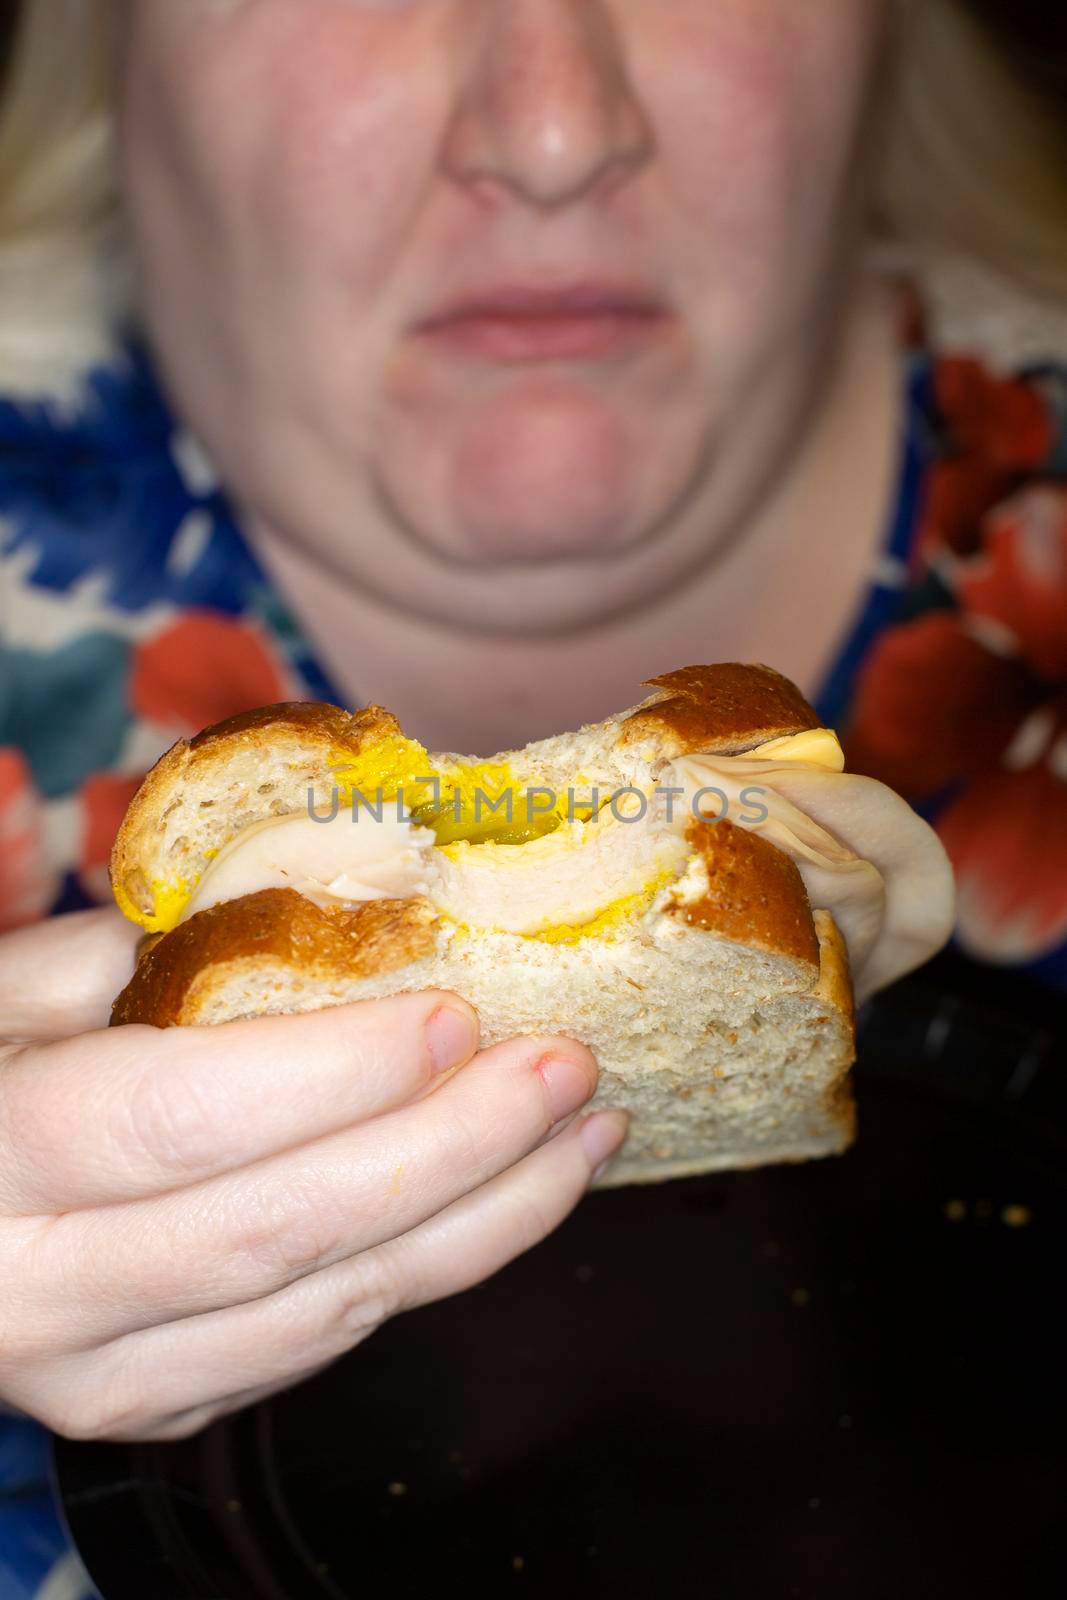 Woman Eating a Bad Tasting Sandwich by tornado98